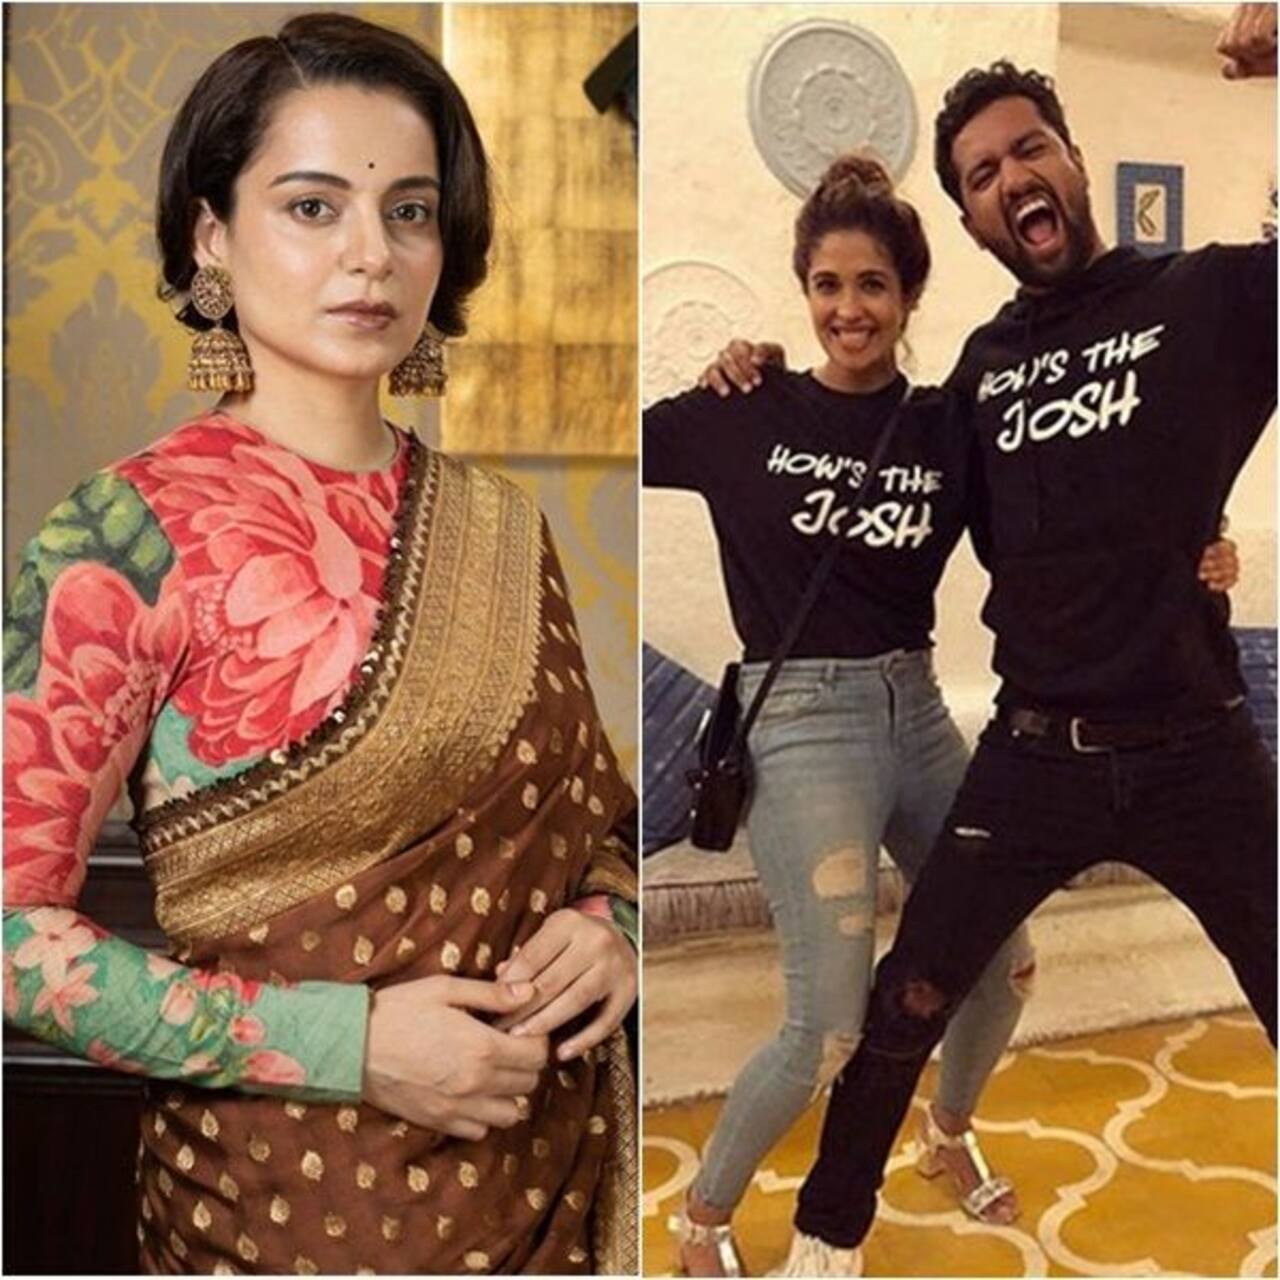 Trending Entertainment News Today: Kangana Ranaut says 'India got freedom in 2014'; Vicky Kaushal's ex Harleen Sethi reacts to his wedding with Katrina Kaif and more